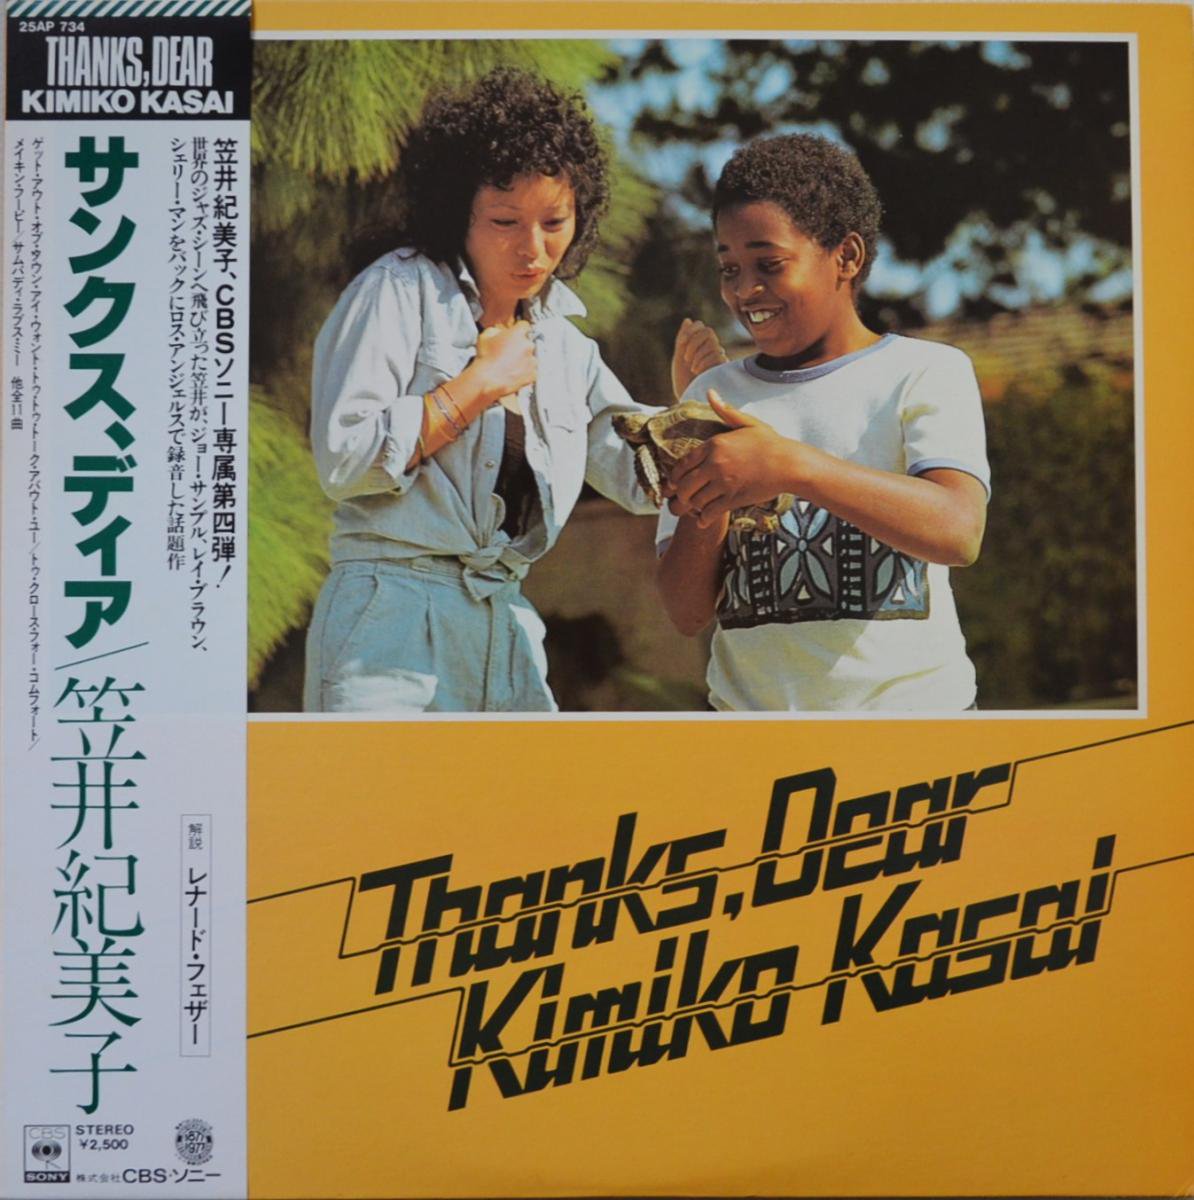 JAPANESE GROOVE / 和モノ - JAPANESE JAZZ u0026 FUSION / 和ジャズ - HIP TANK RECORDS